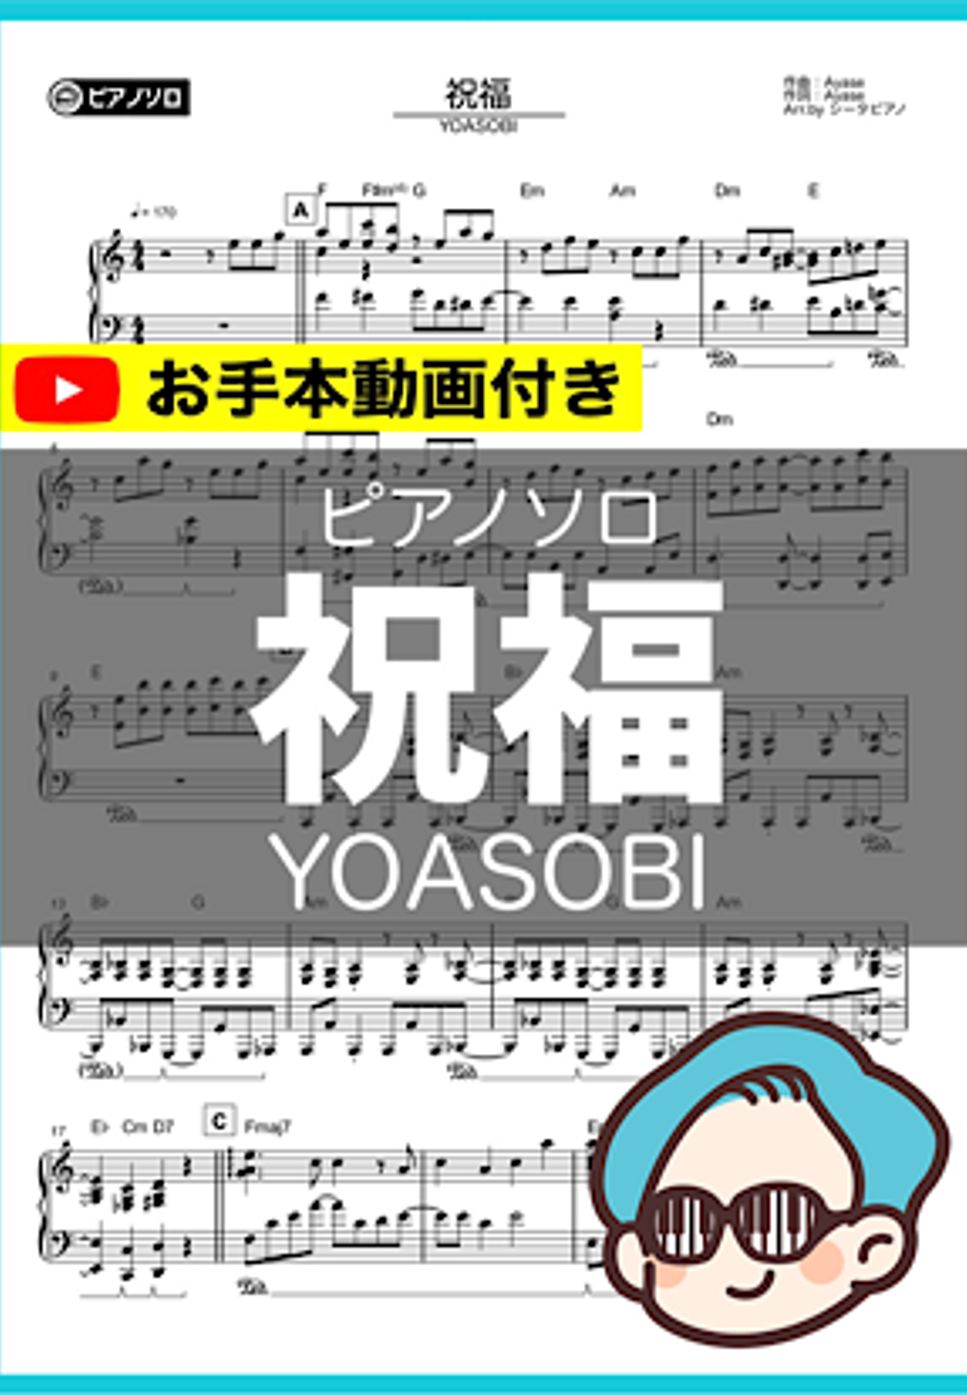 YOASOBI - 祝福 by シータピアノ